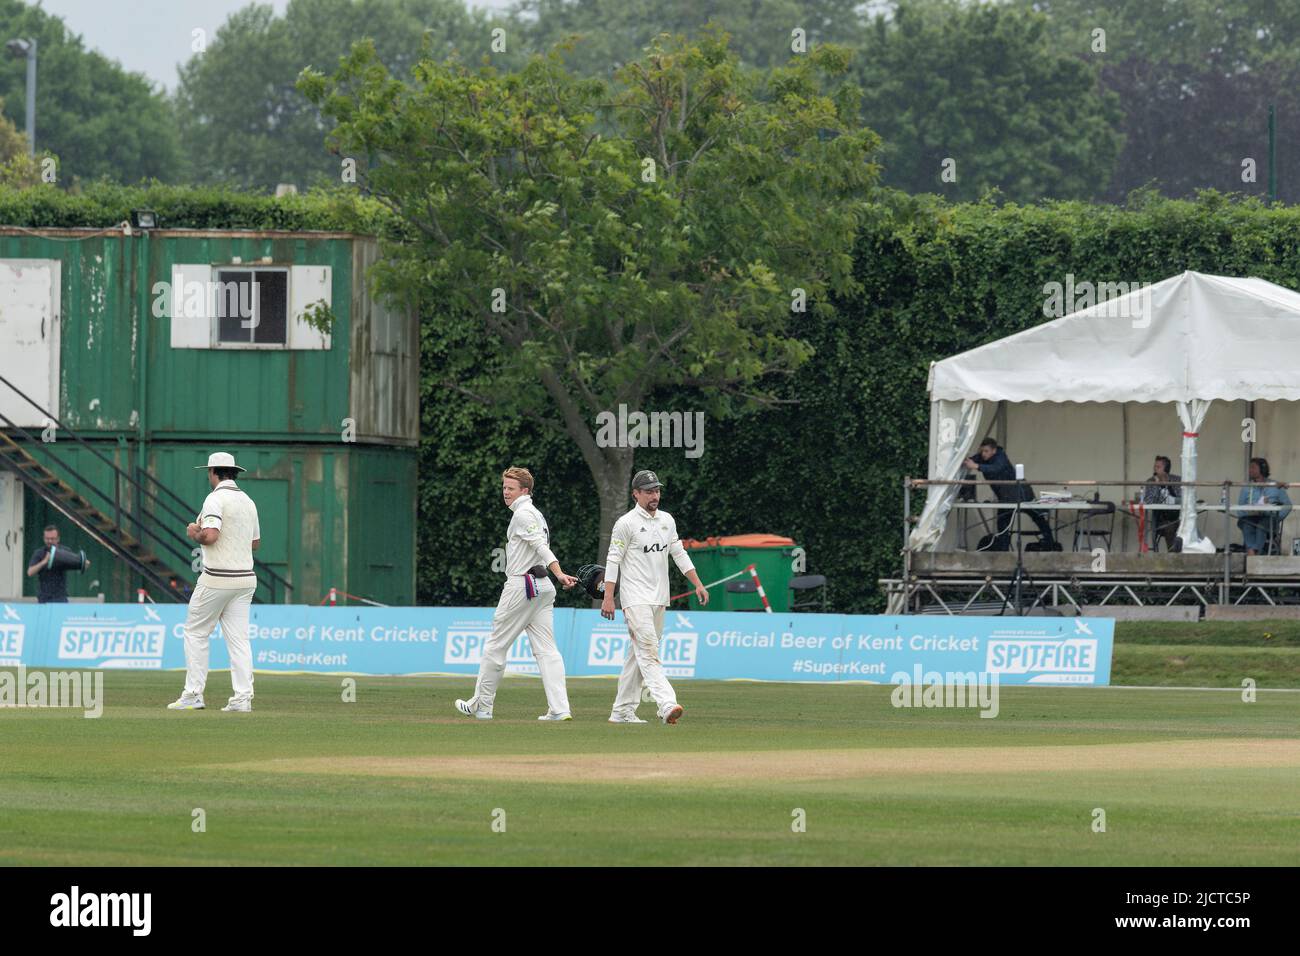 Surrey cricketers at Kent County Cricket Ground Beckenham Stock Photo